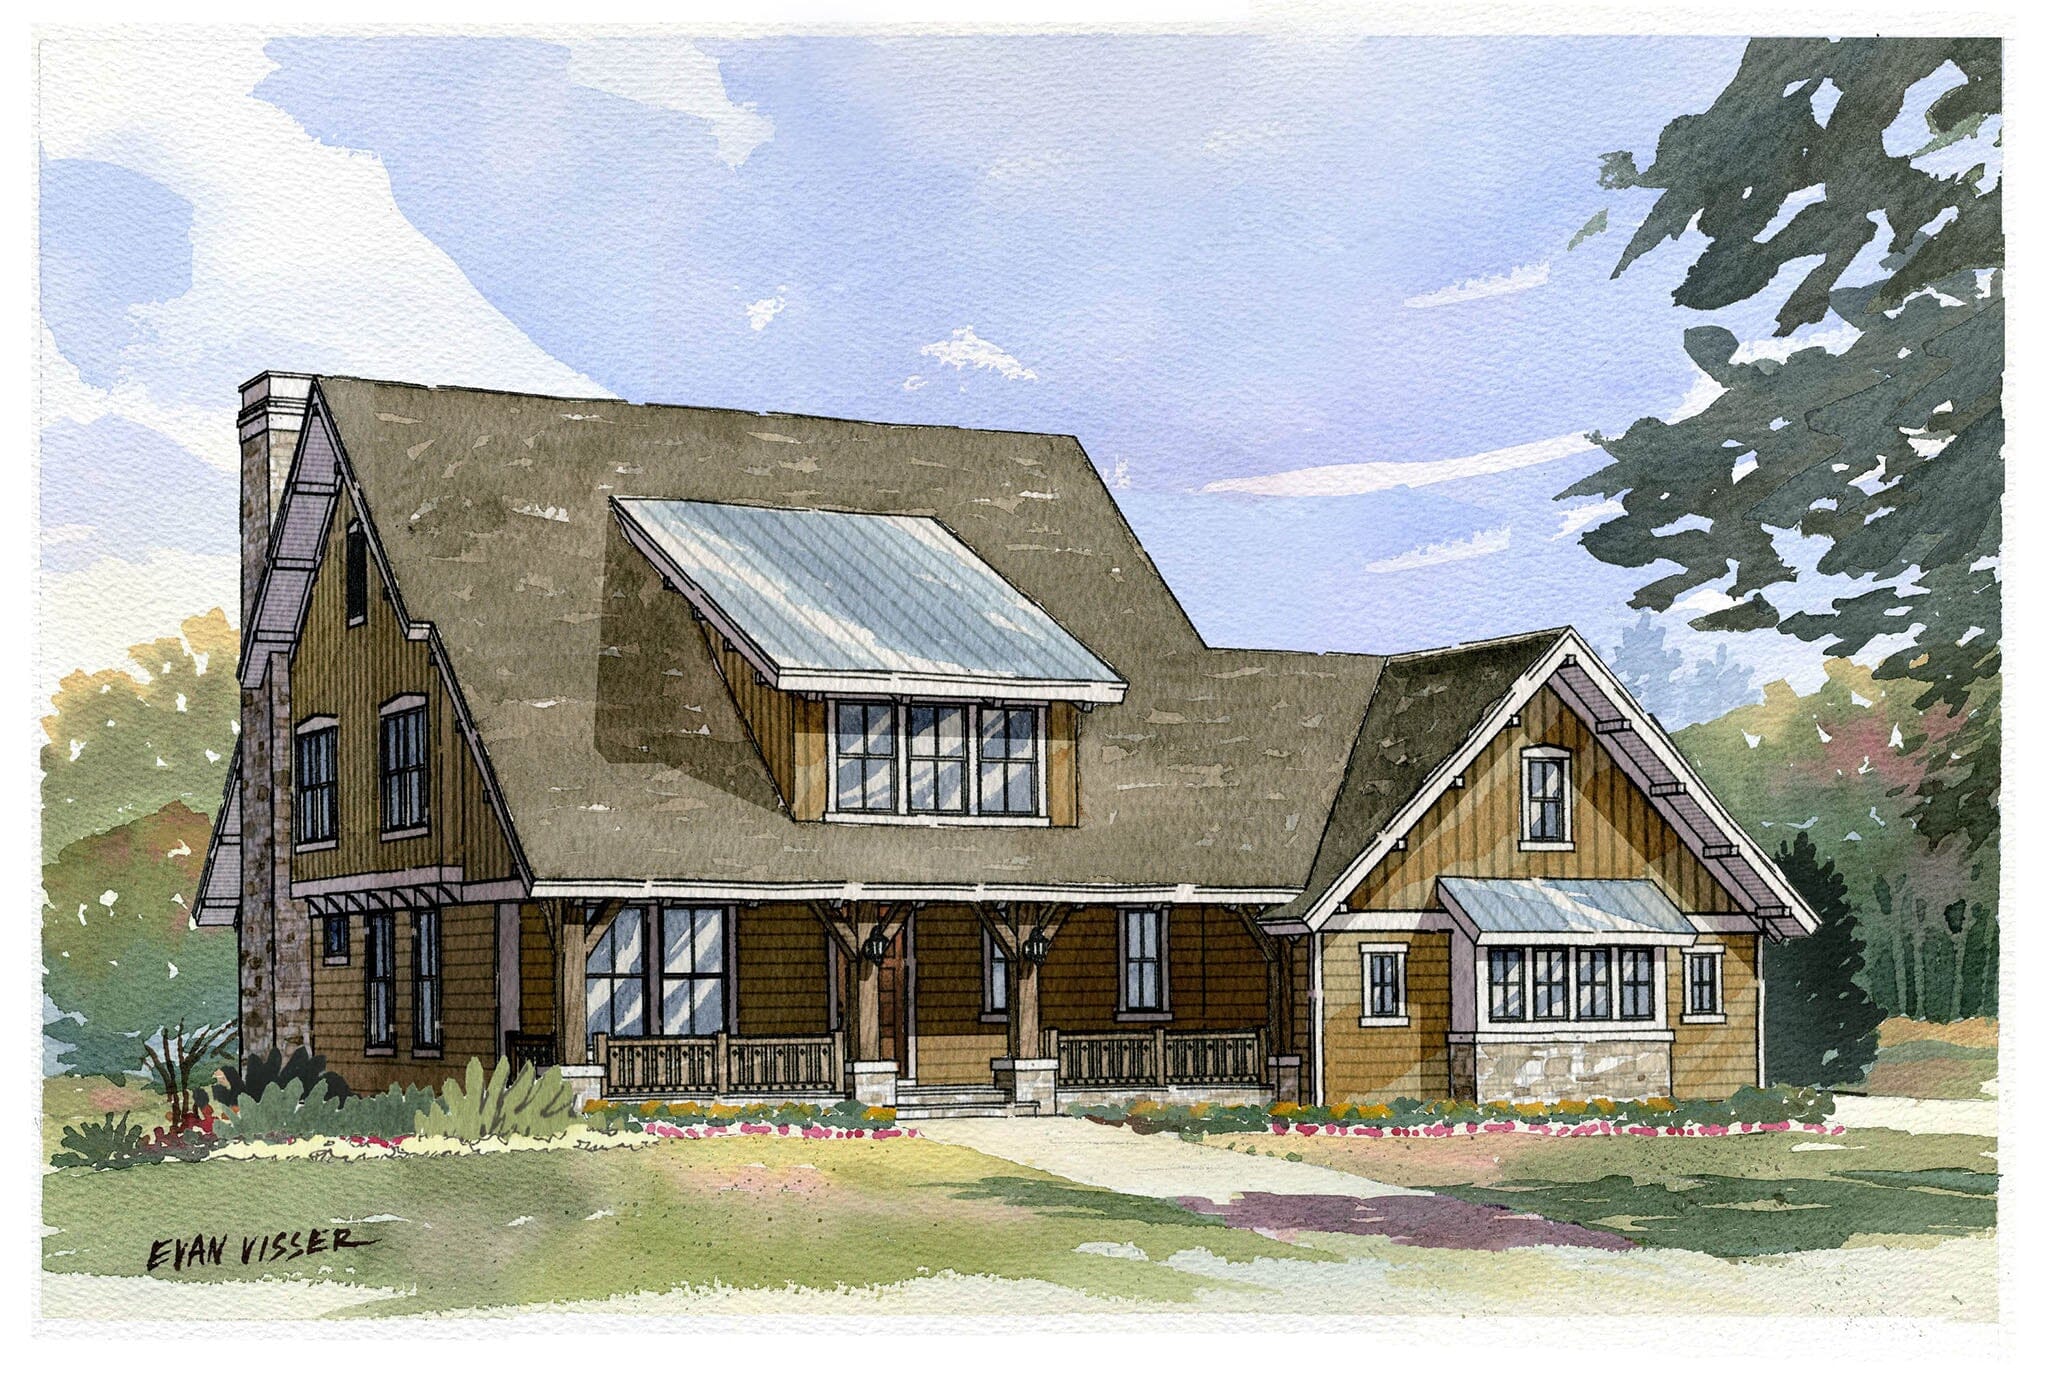 Alpine - Craftsman House Floor Plan - SketchPad House Plans